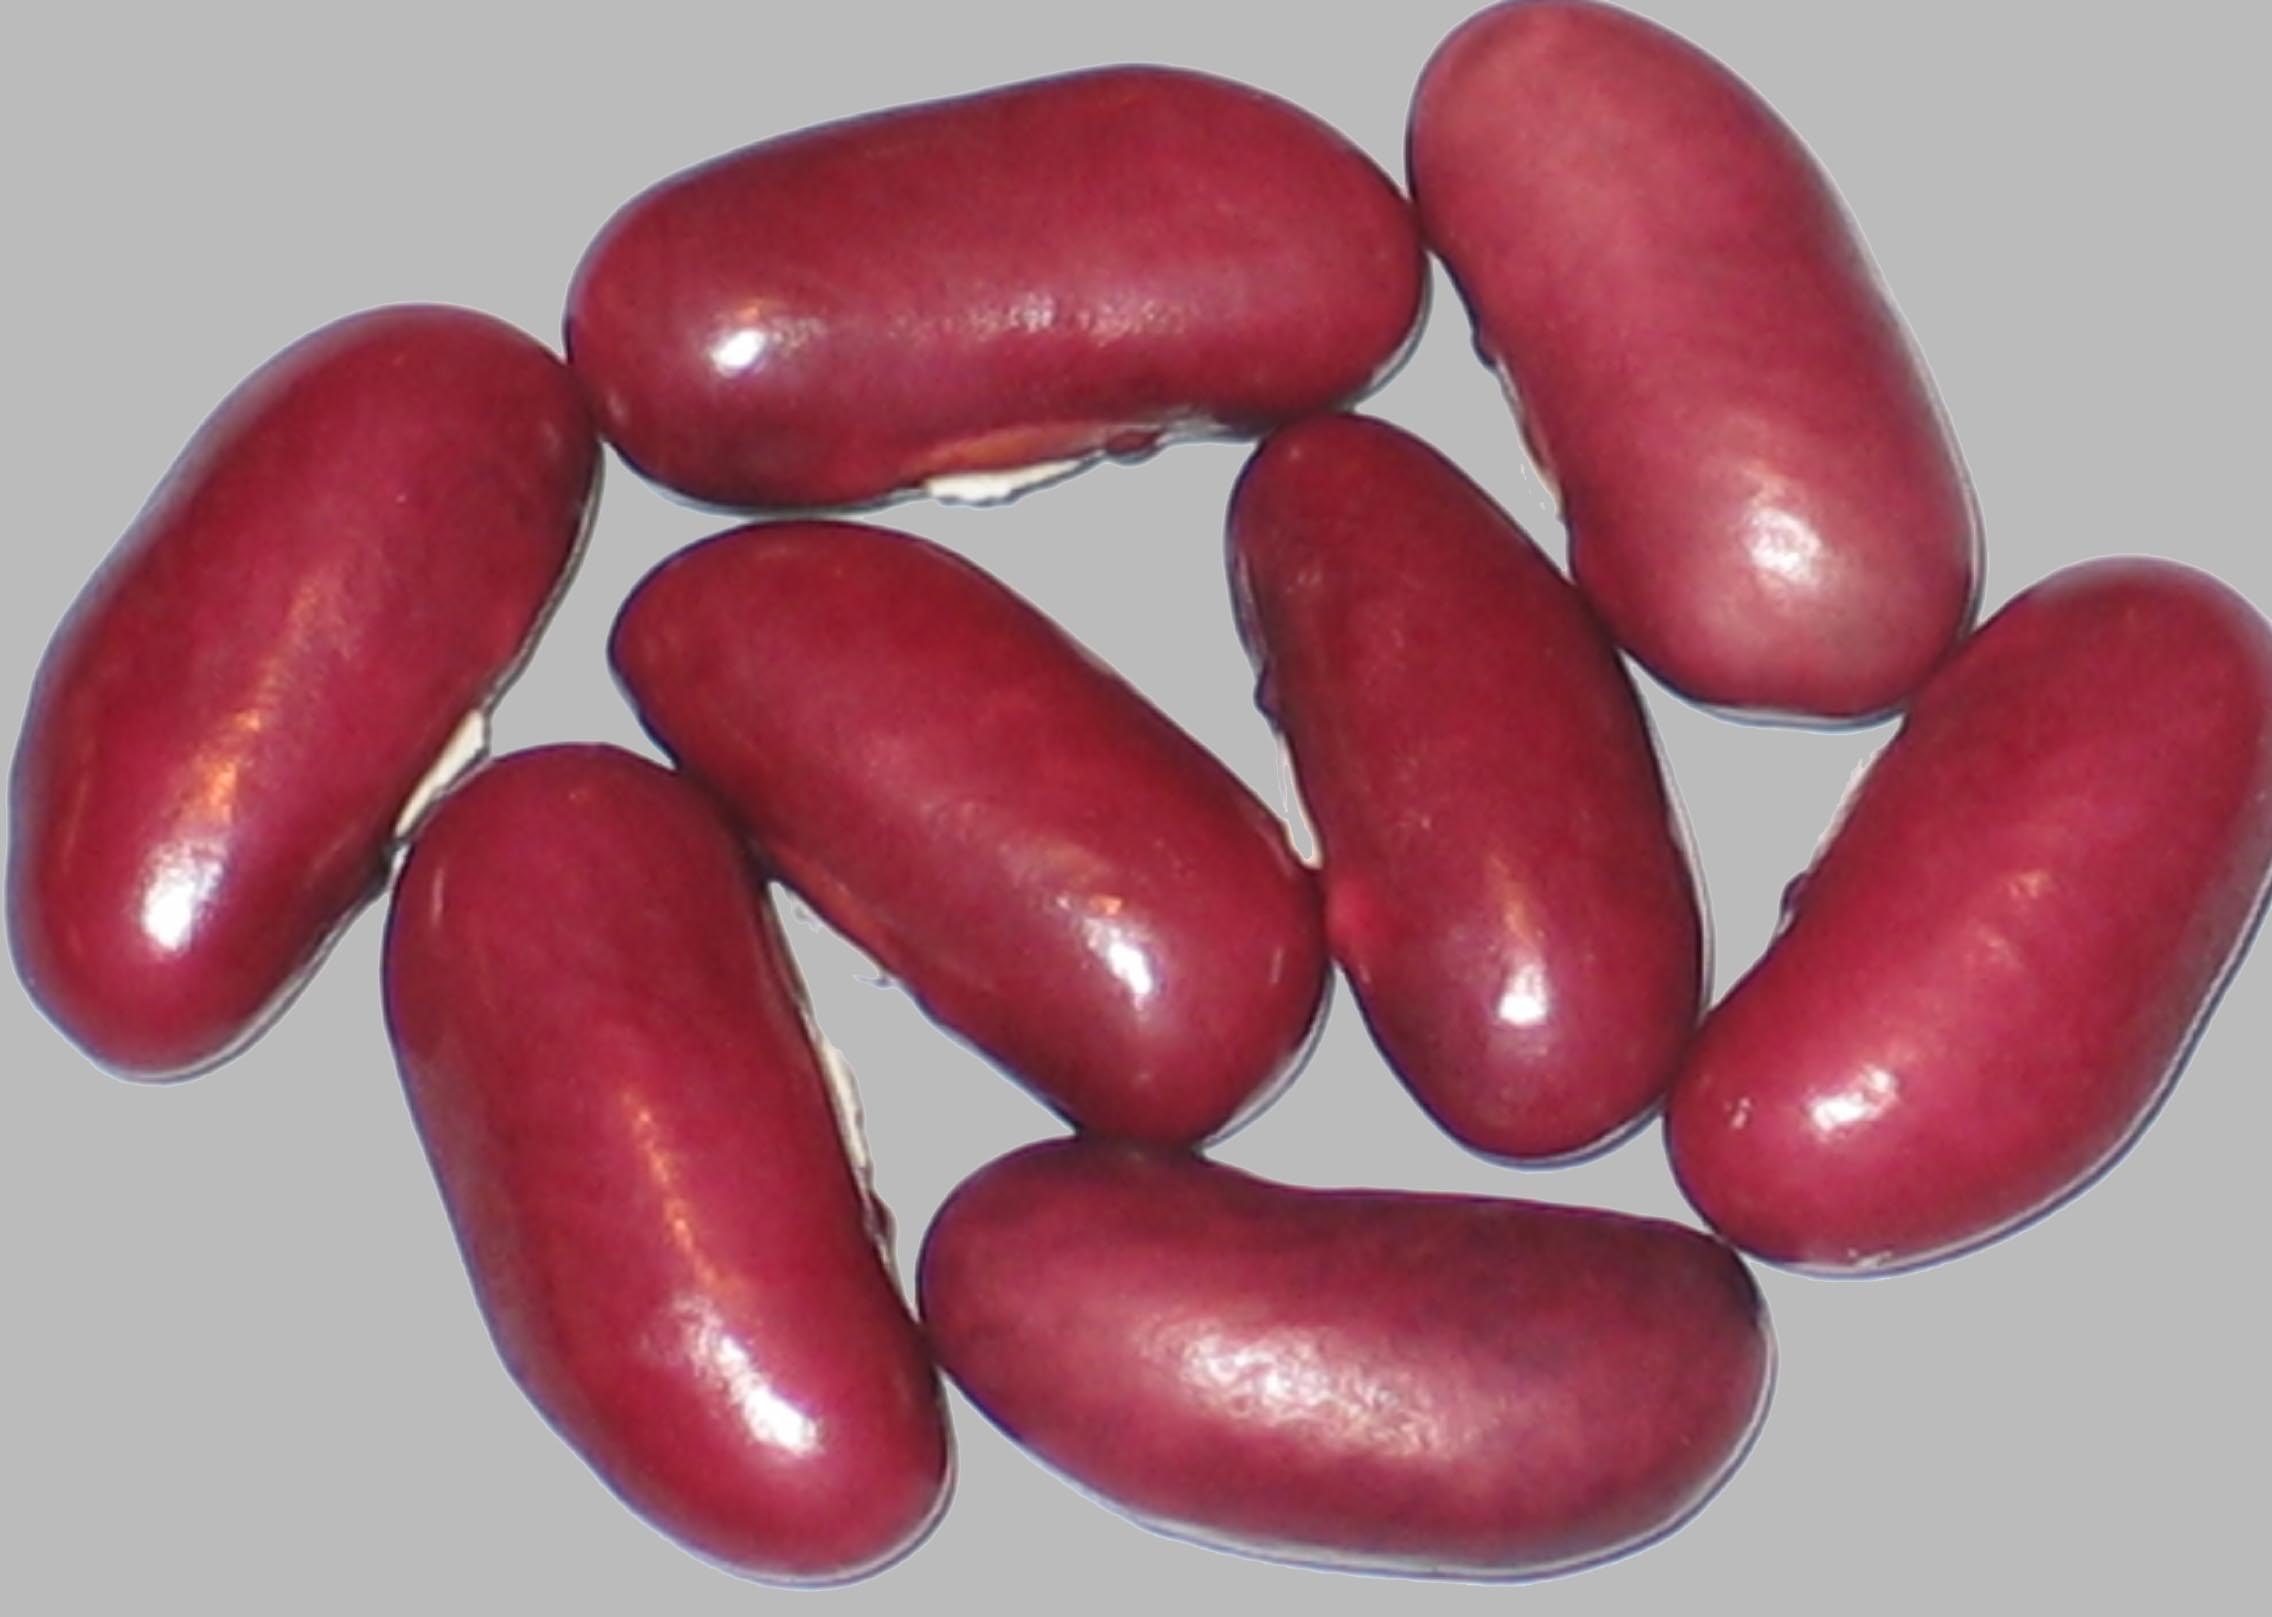 image of Wide Richmond Wonder beans